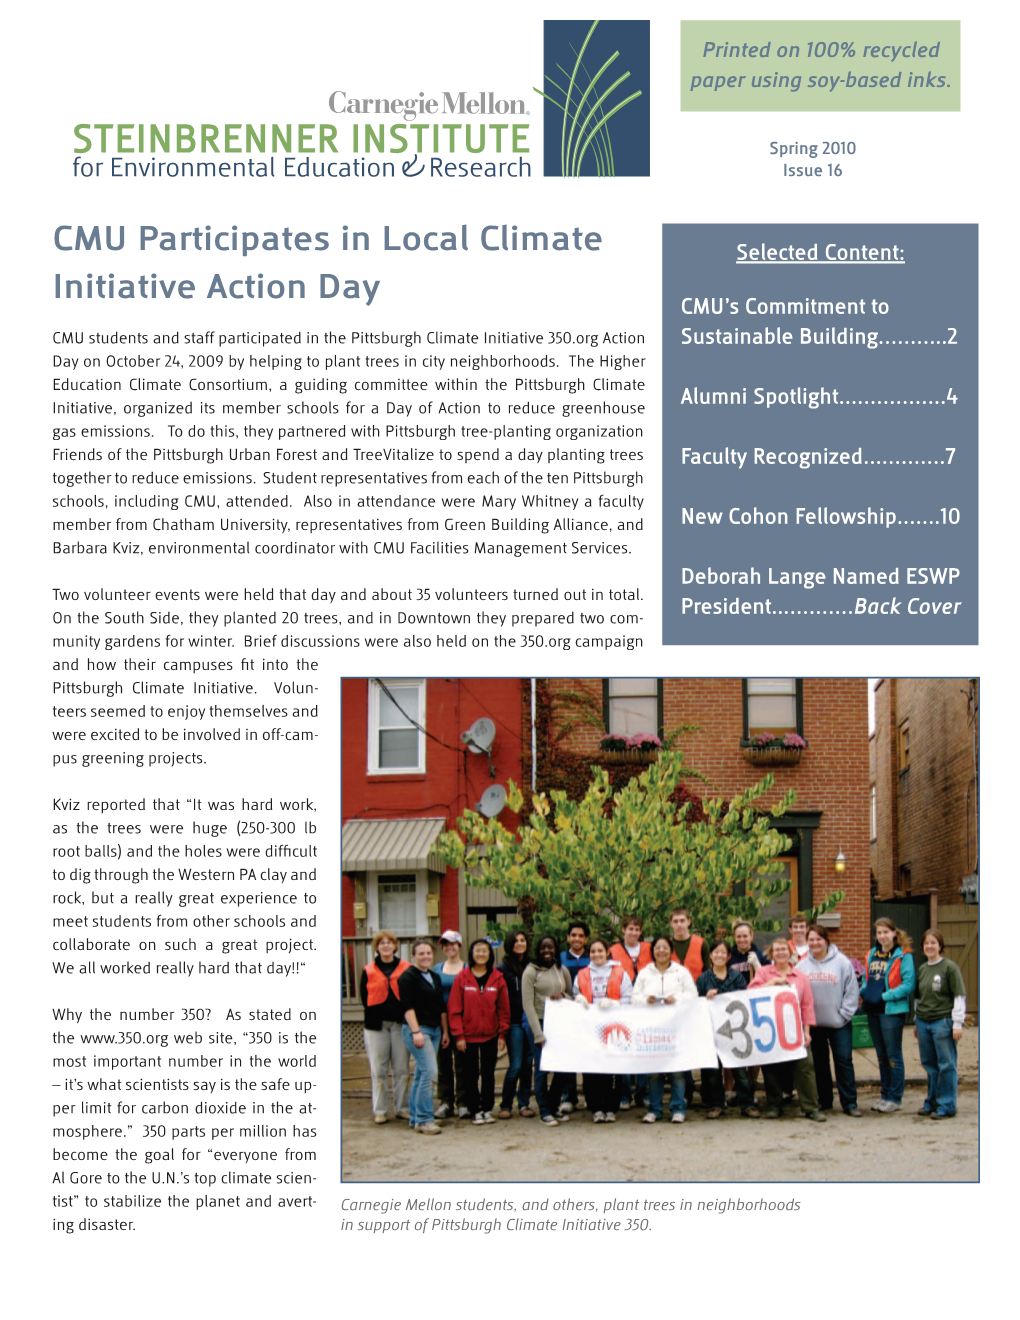 CMU Participates in Local Climate Initiative Action